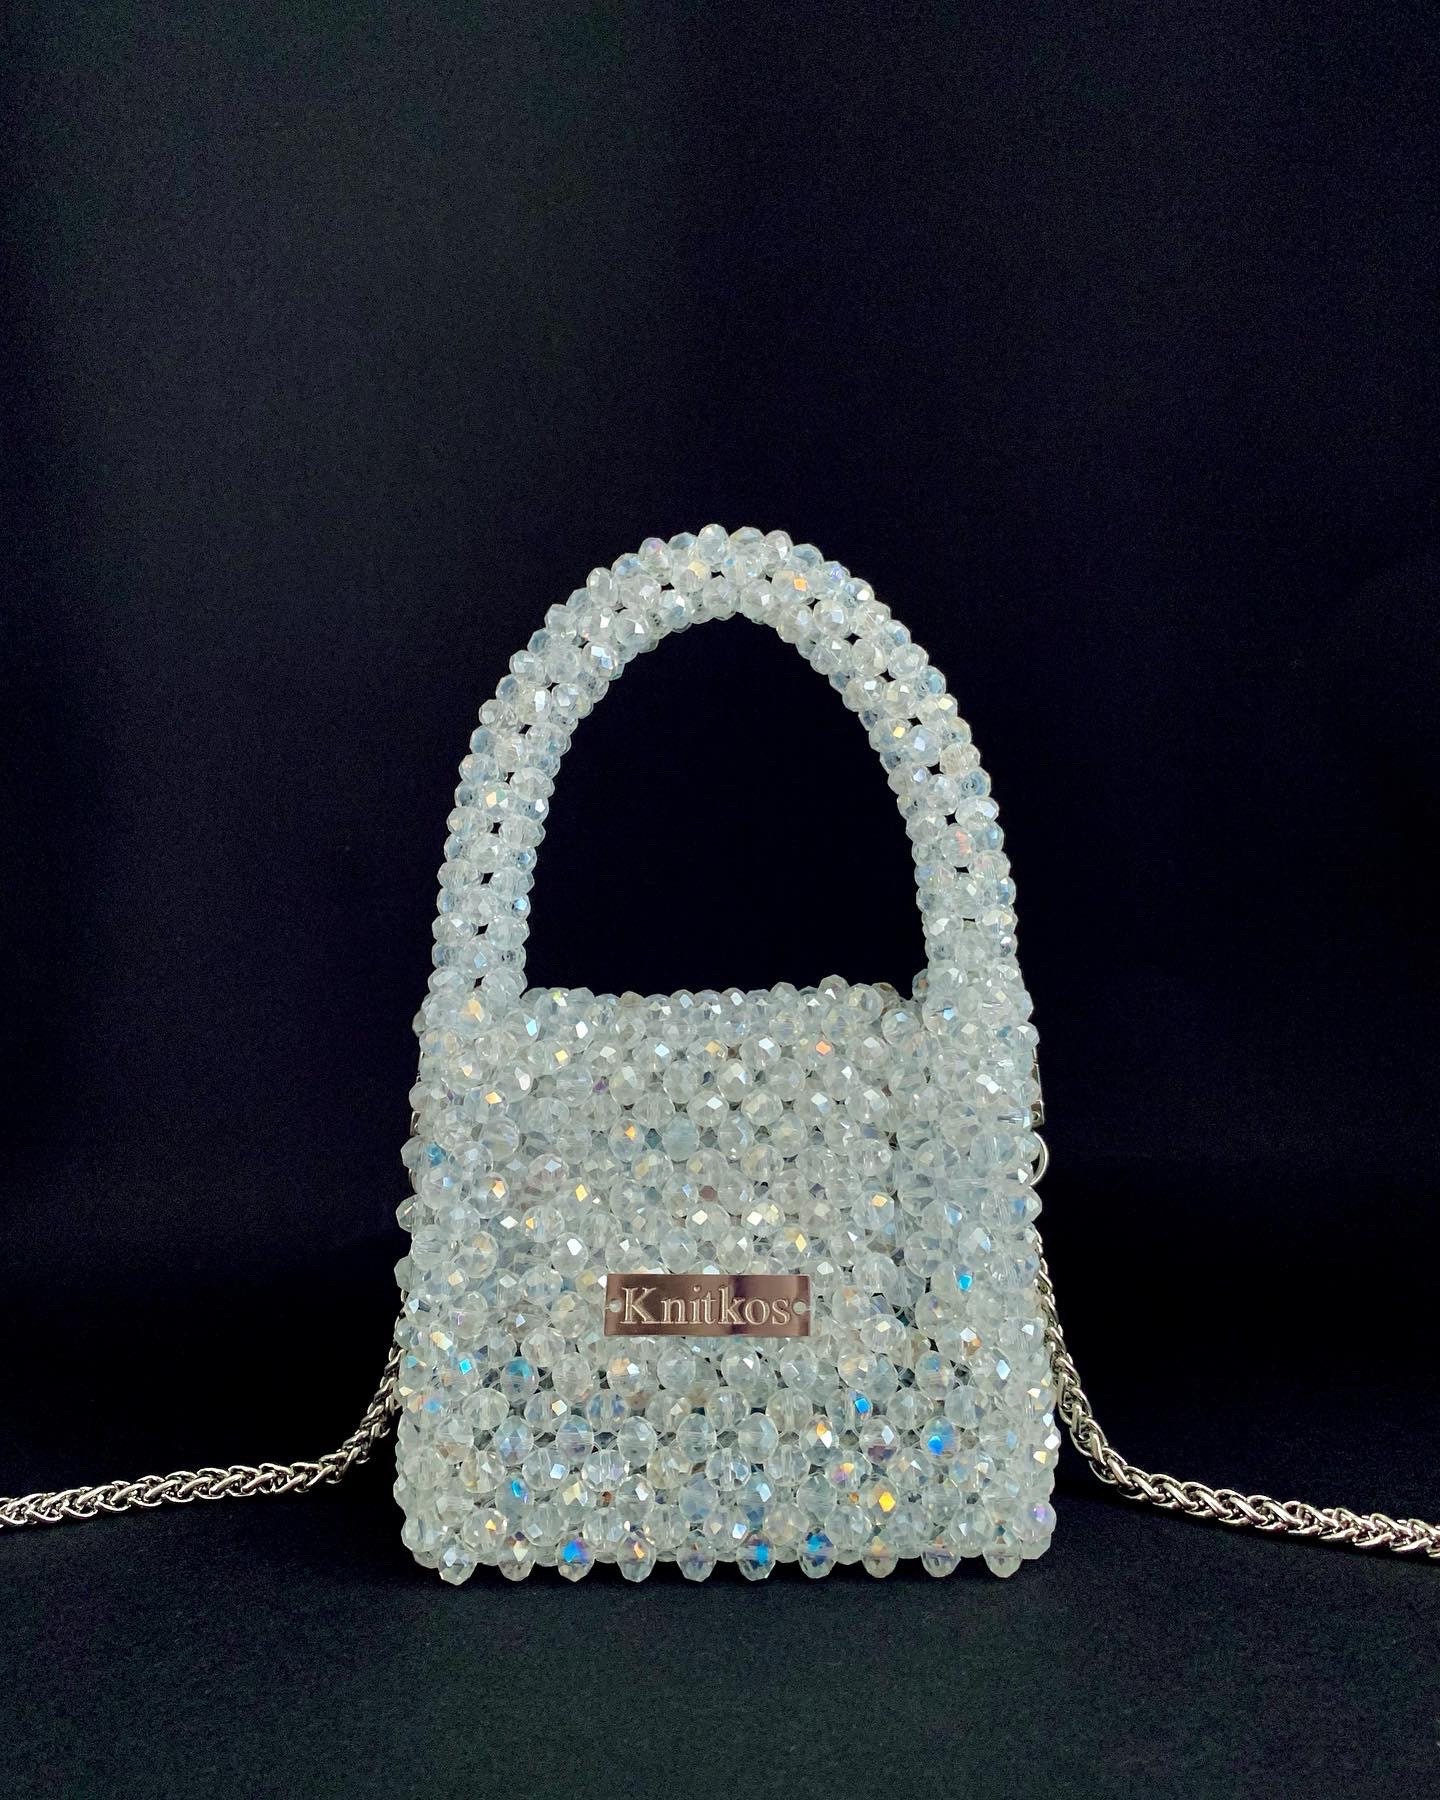 ZYJBM Handmade Beaded Bag Beaded Tassel Tote Hollowed Out Pearls Women's  Bags